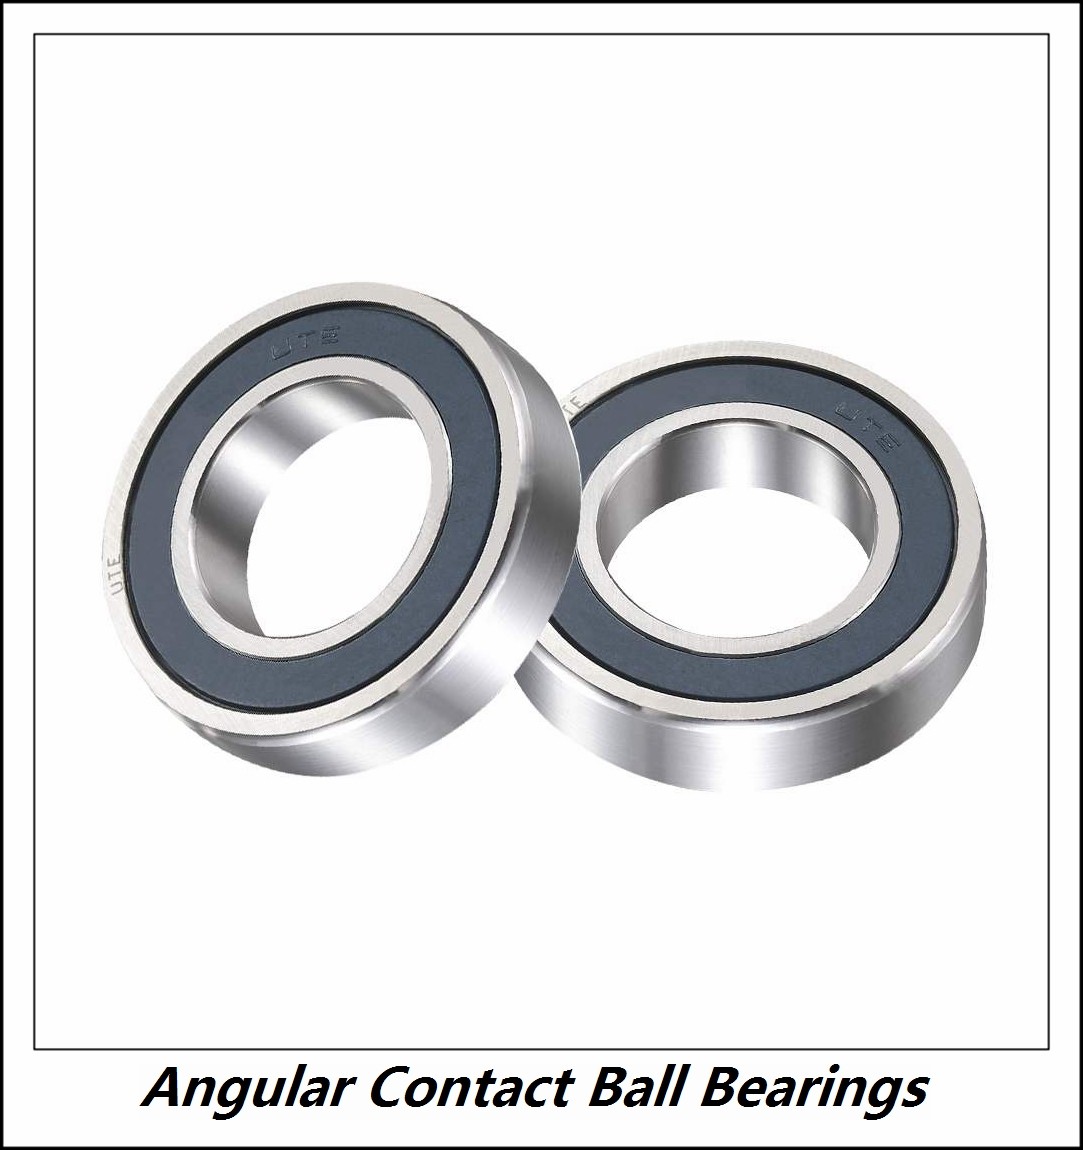 1.181 Inch | 30 Millimeter x 2.441 Inch | 62 Millimeter x 0.937 Inch | 23.8 Millimeter  NSK 5206JC3  Angular Contact Ball Bearings